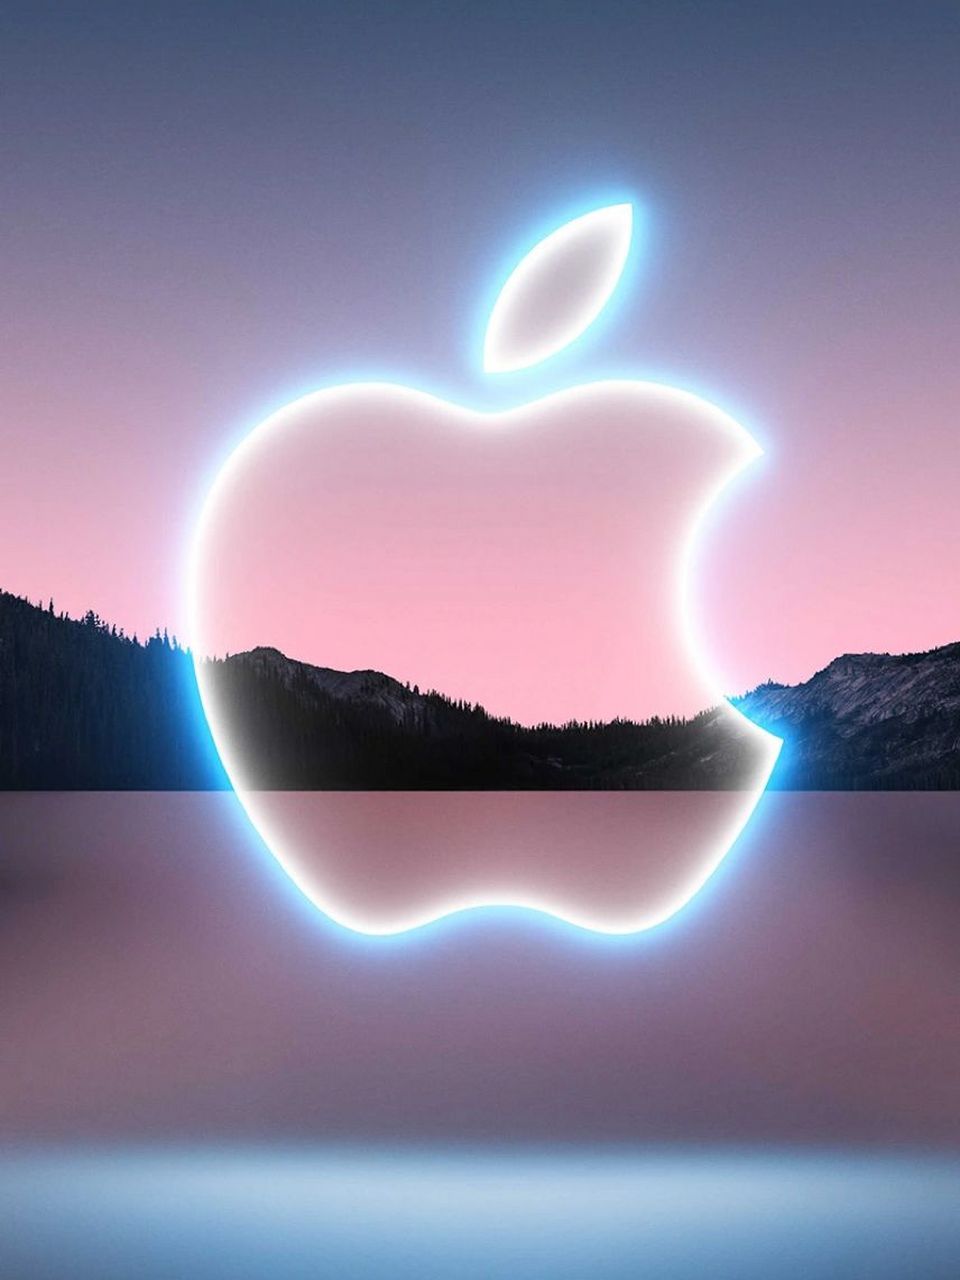 iphone13苹果发布会高清壁纸分享 高清手机壁纸,包含iphone,ipad,mac